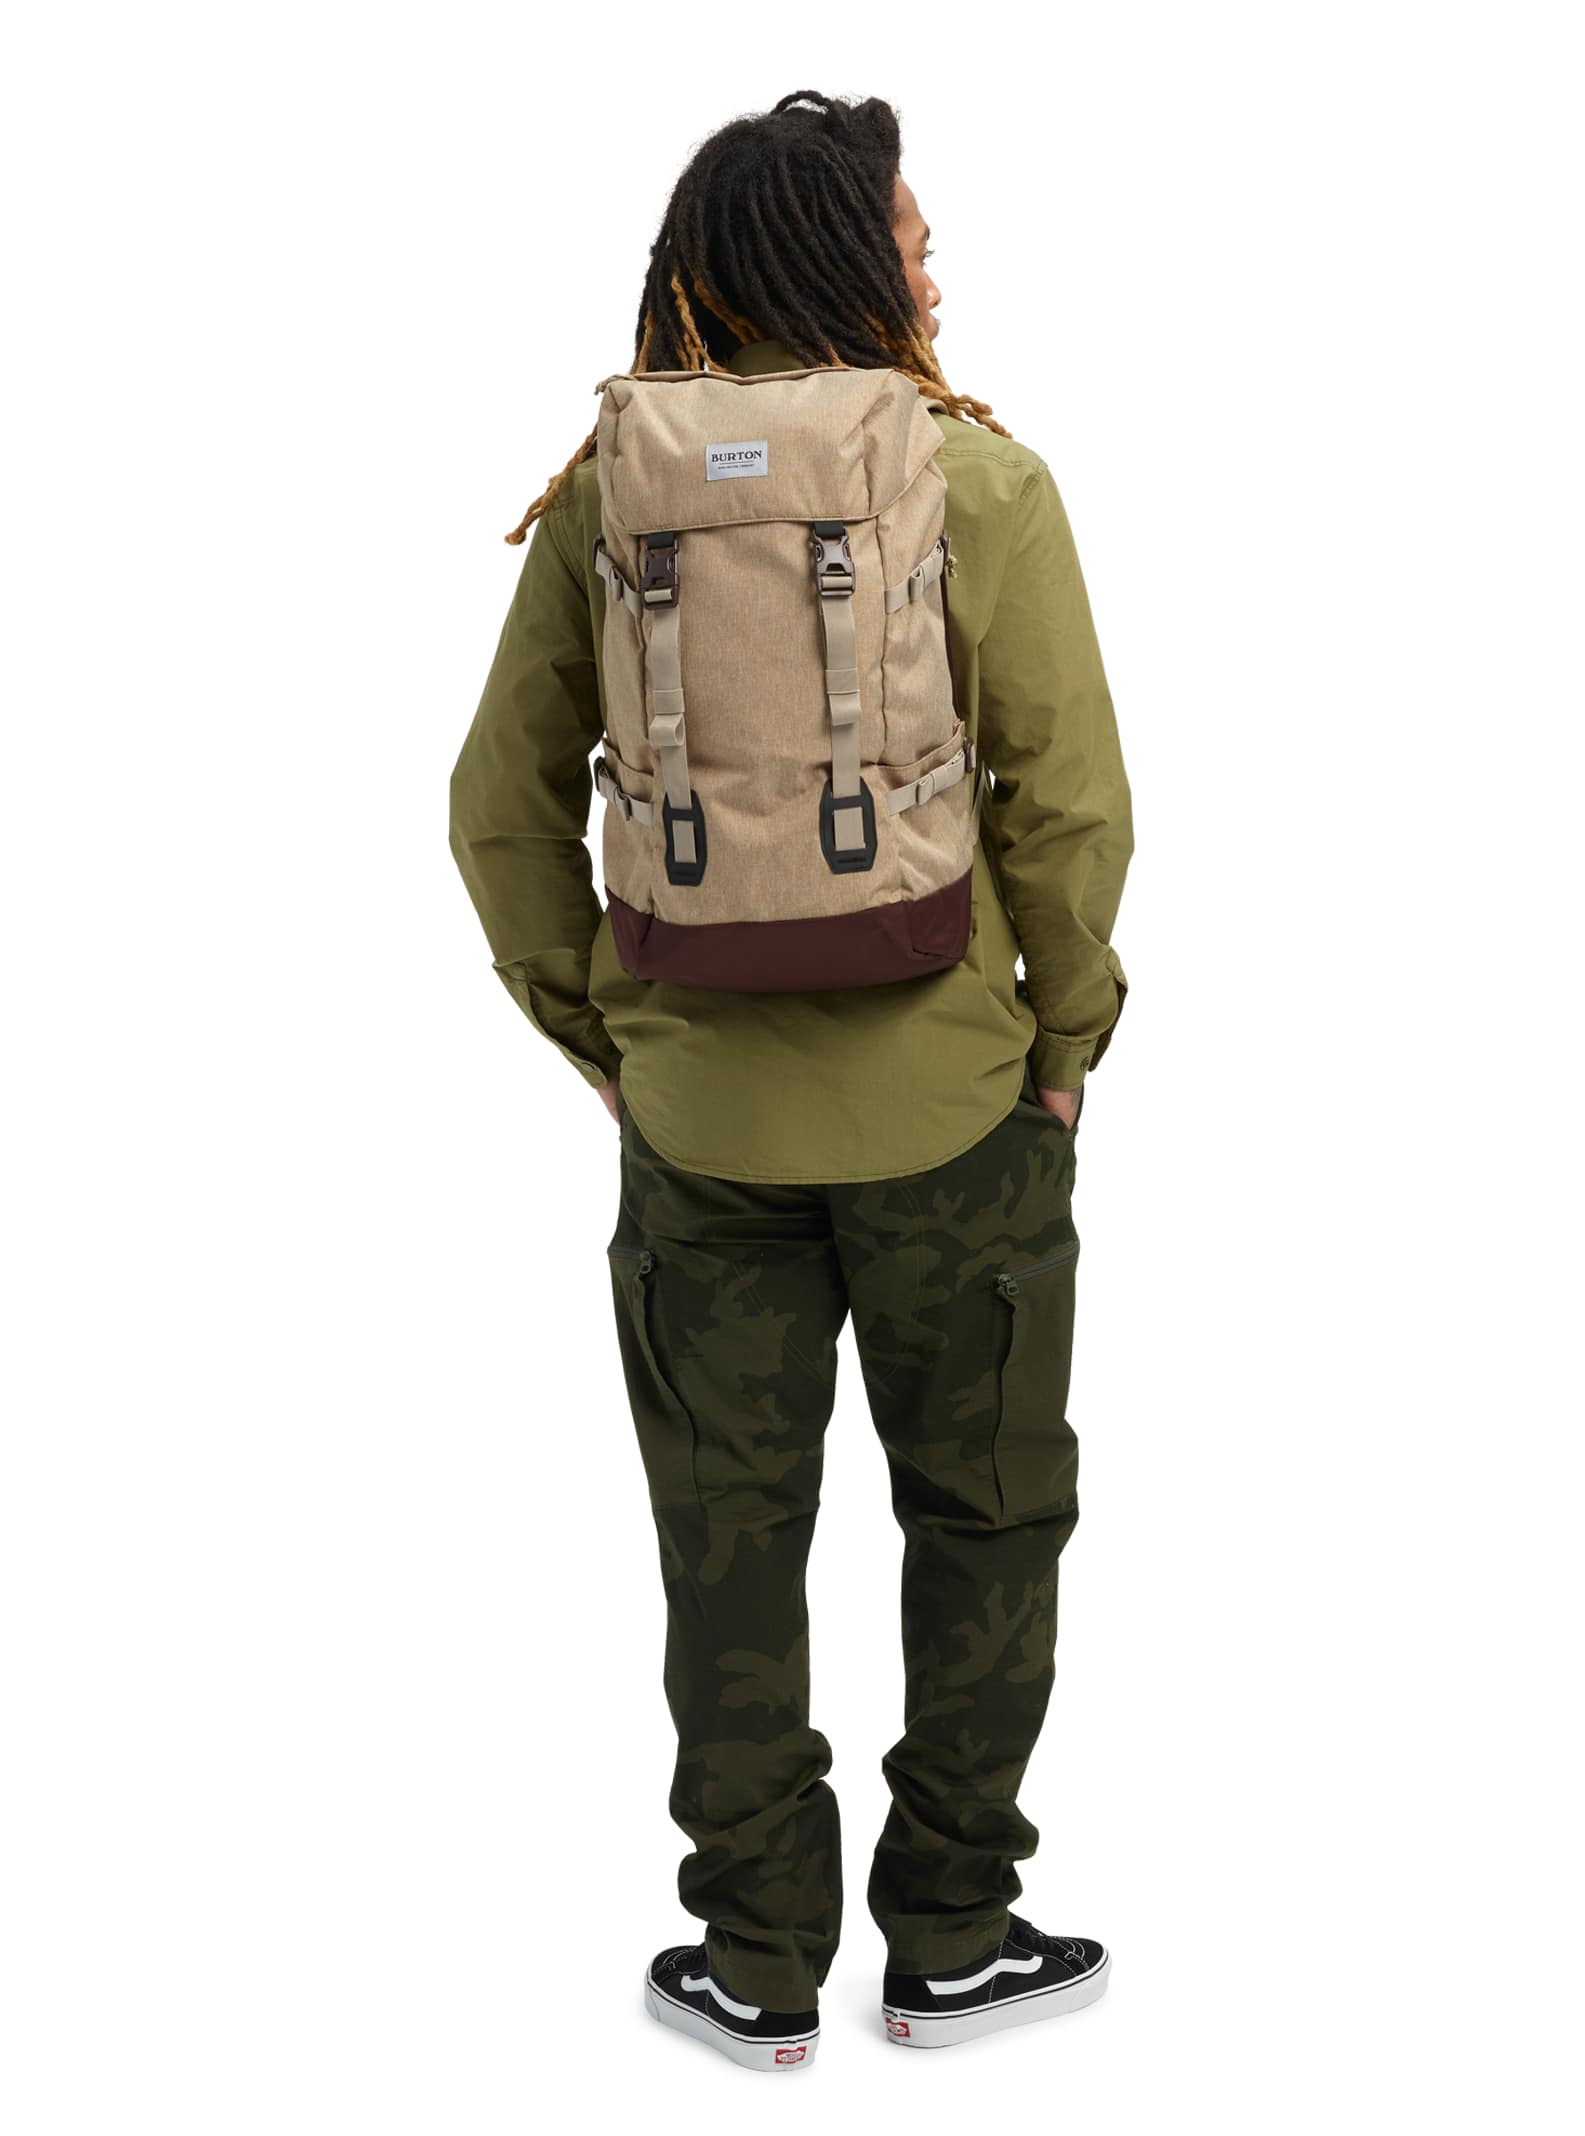 Burton Tinder 2.0 30L Backpack | Burton.com Winter 2020 US